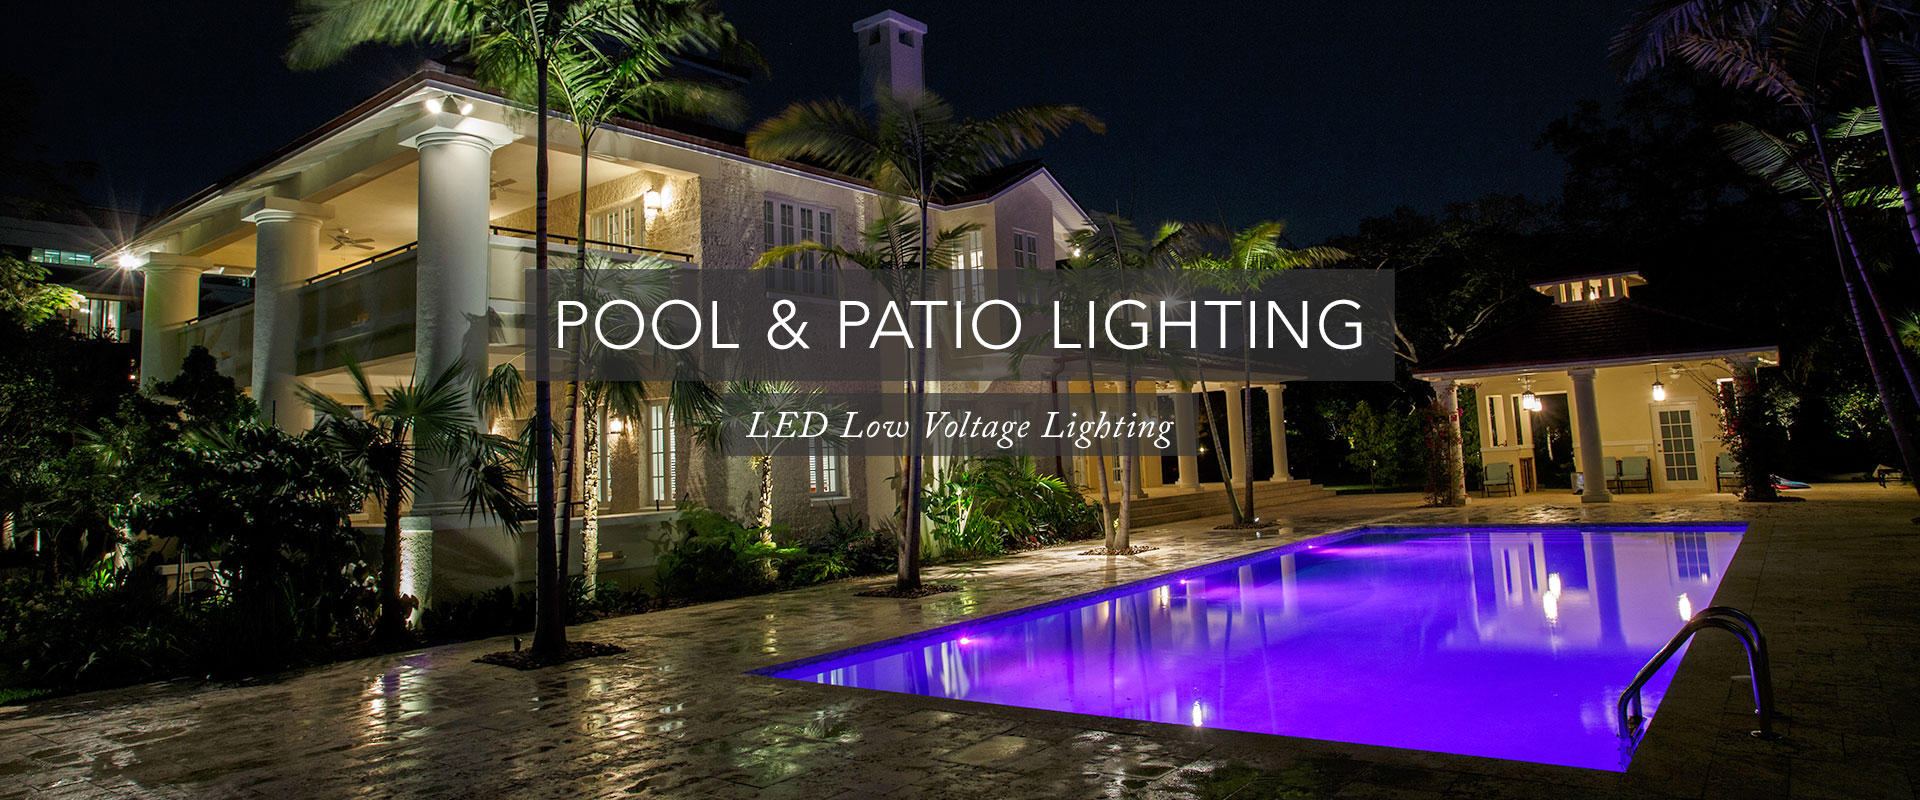 Pool & Patio Lighting